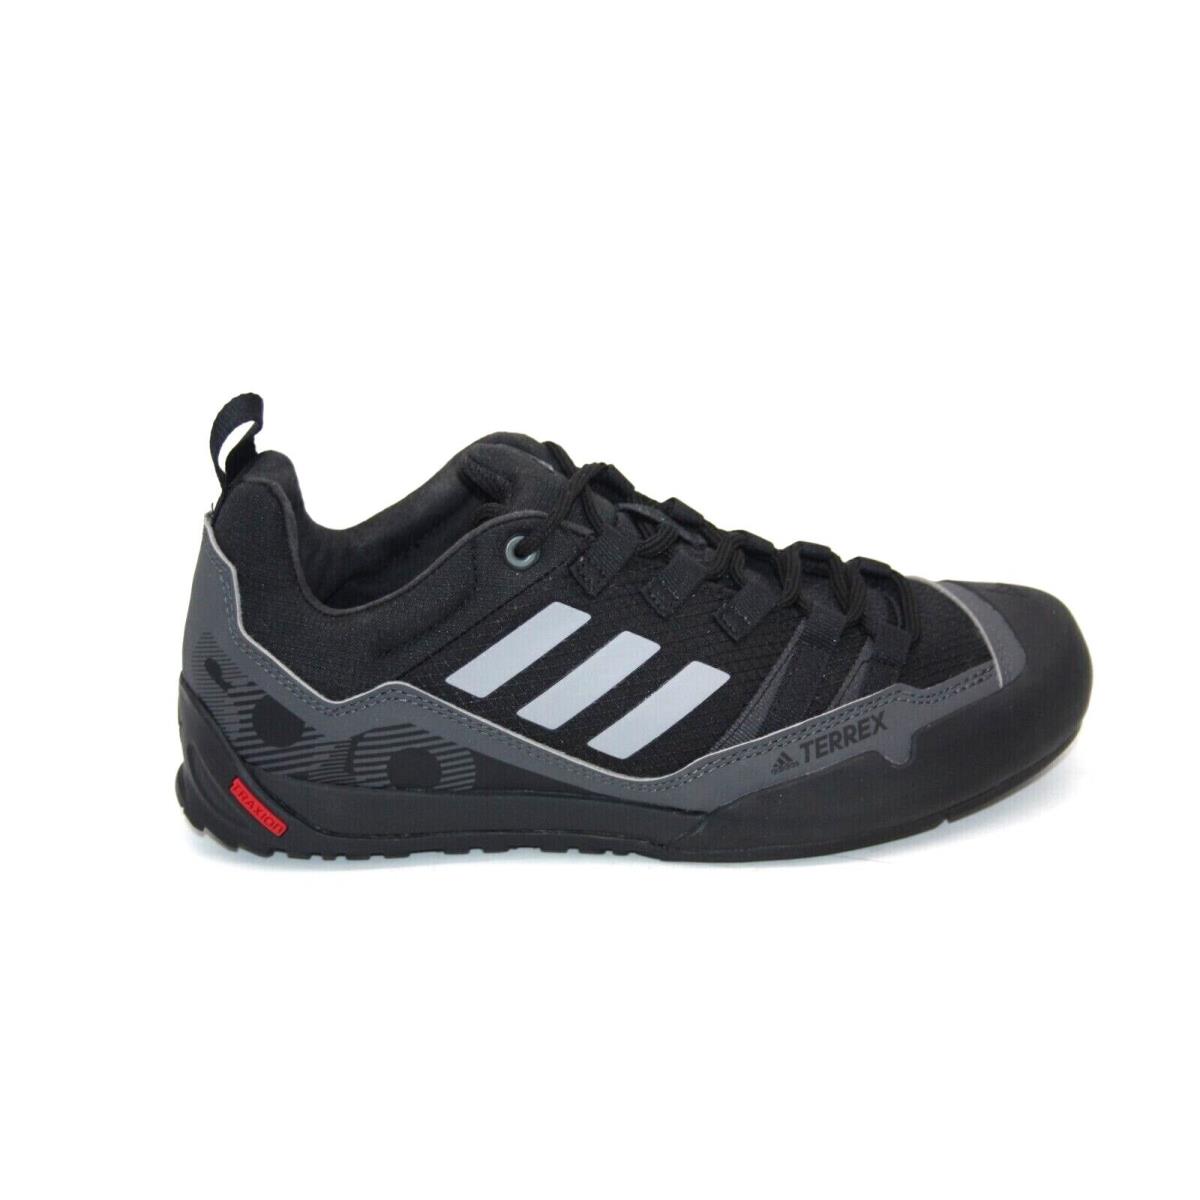 Adidas Terrex Swift Solo 2 Black/black/grey GZ0331 Iunisex Hiking Shoe